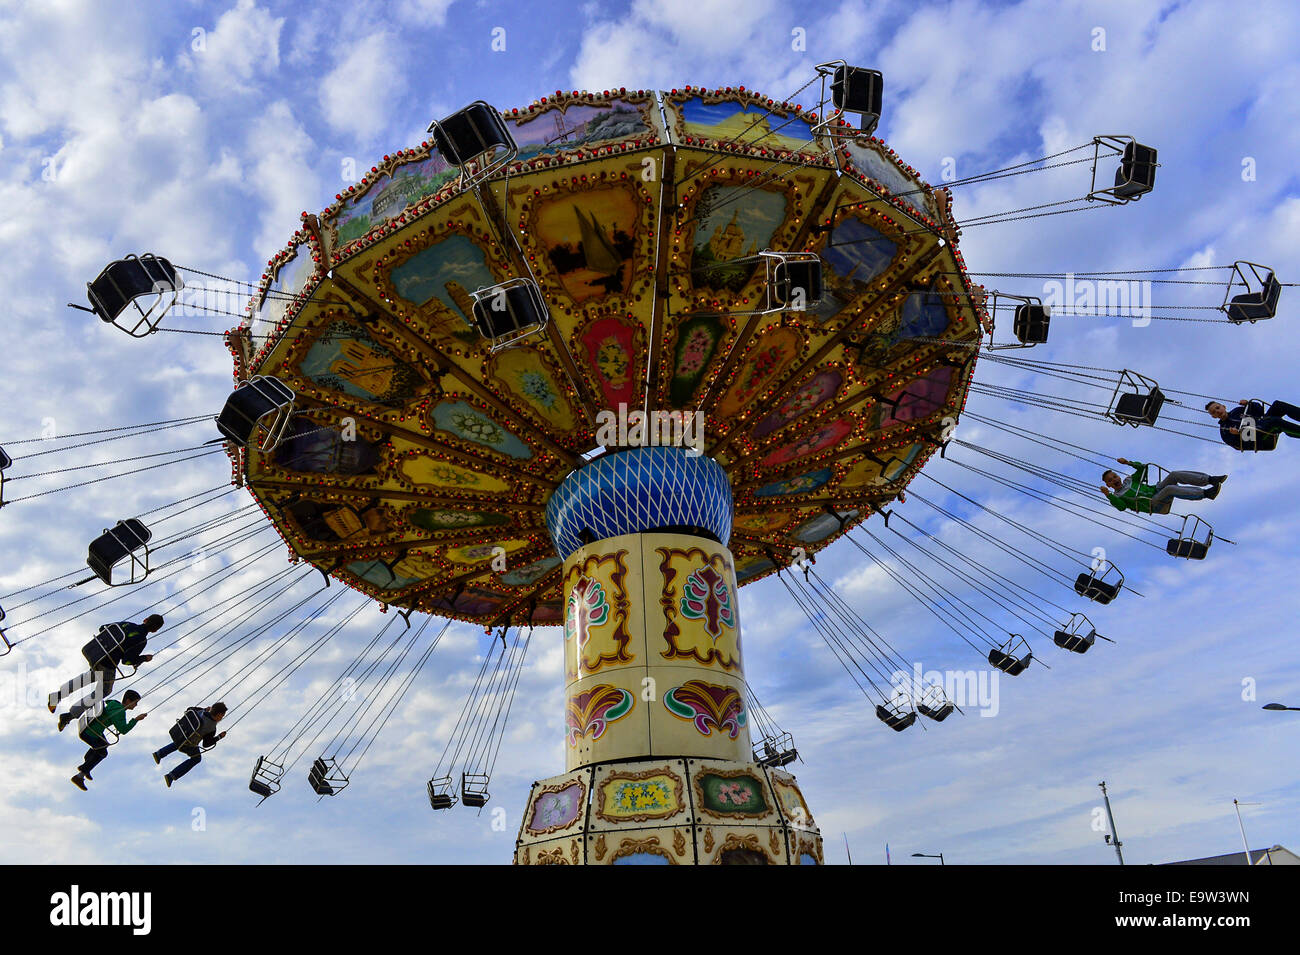 Stock Photo - Fairground Spinning carousel.  ©George Sweeney/Alamy Stock Photo